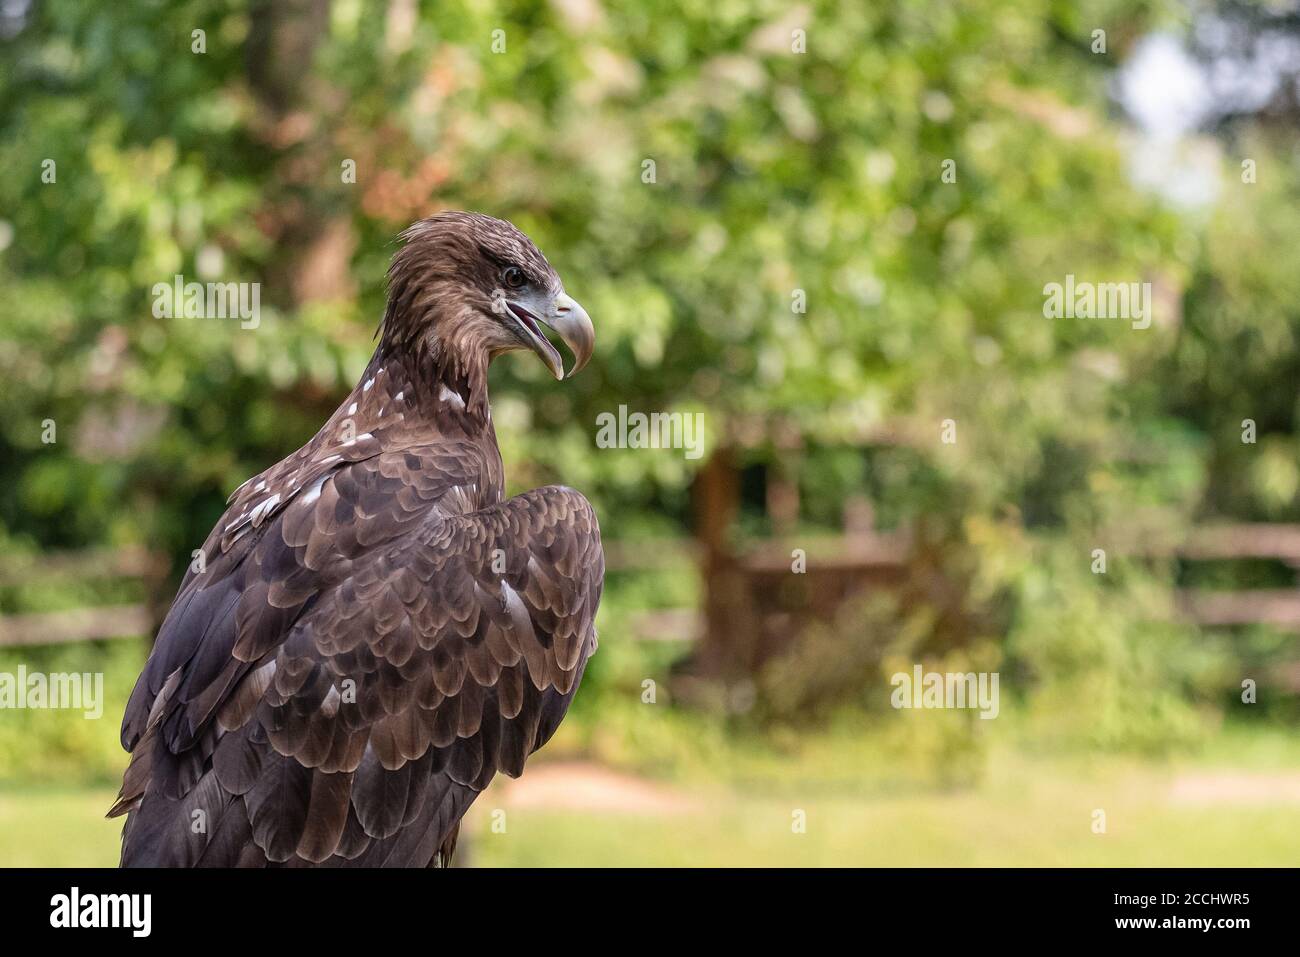 Close-up portrait of a golden eagle, a large American bird taken ...